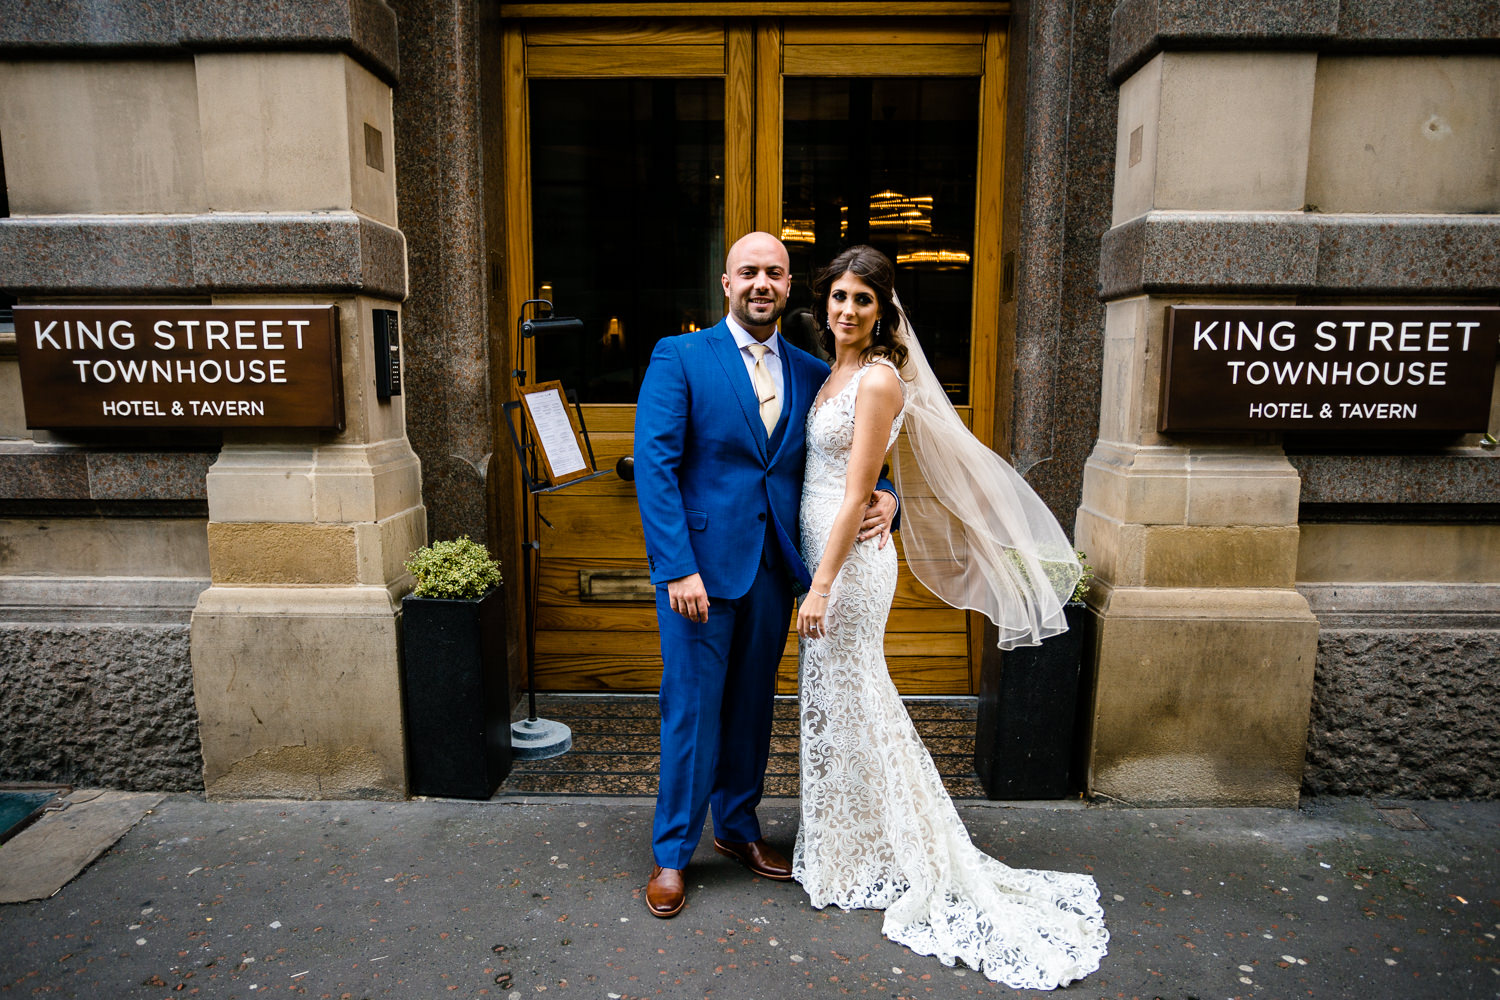 Rachel and Jacques King Street Townhouse Manchester wedding photographer-057.jpg